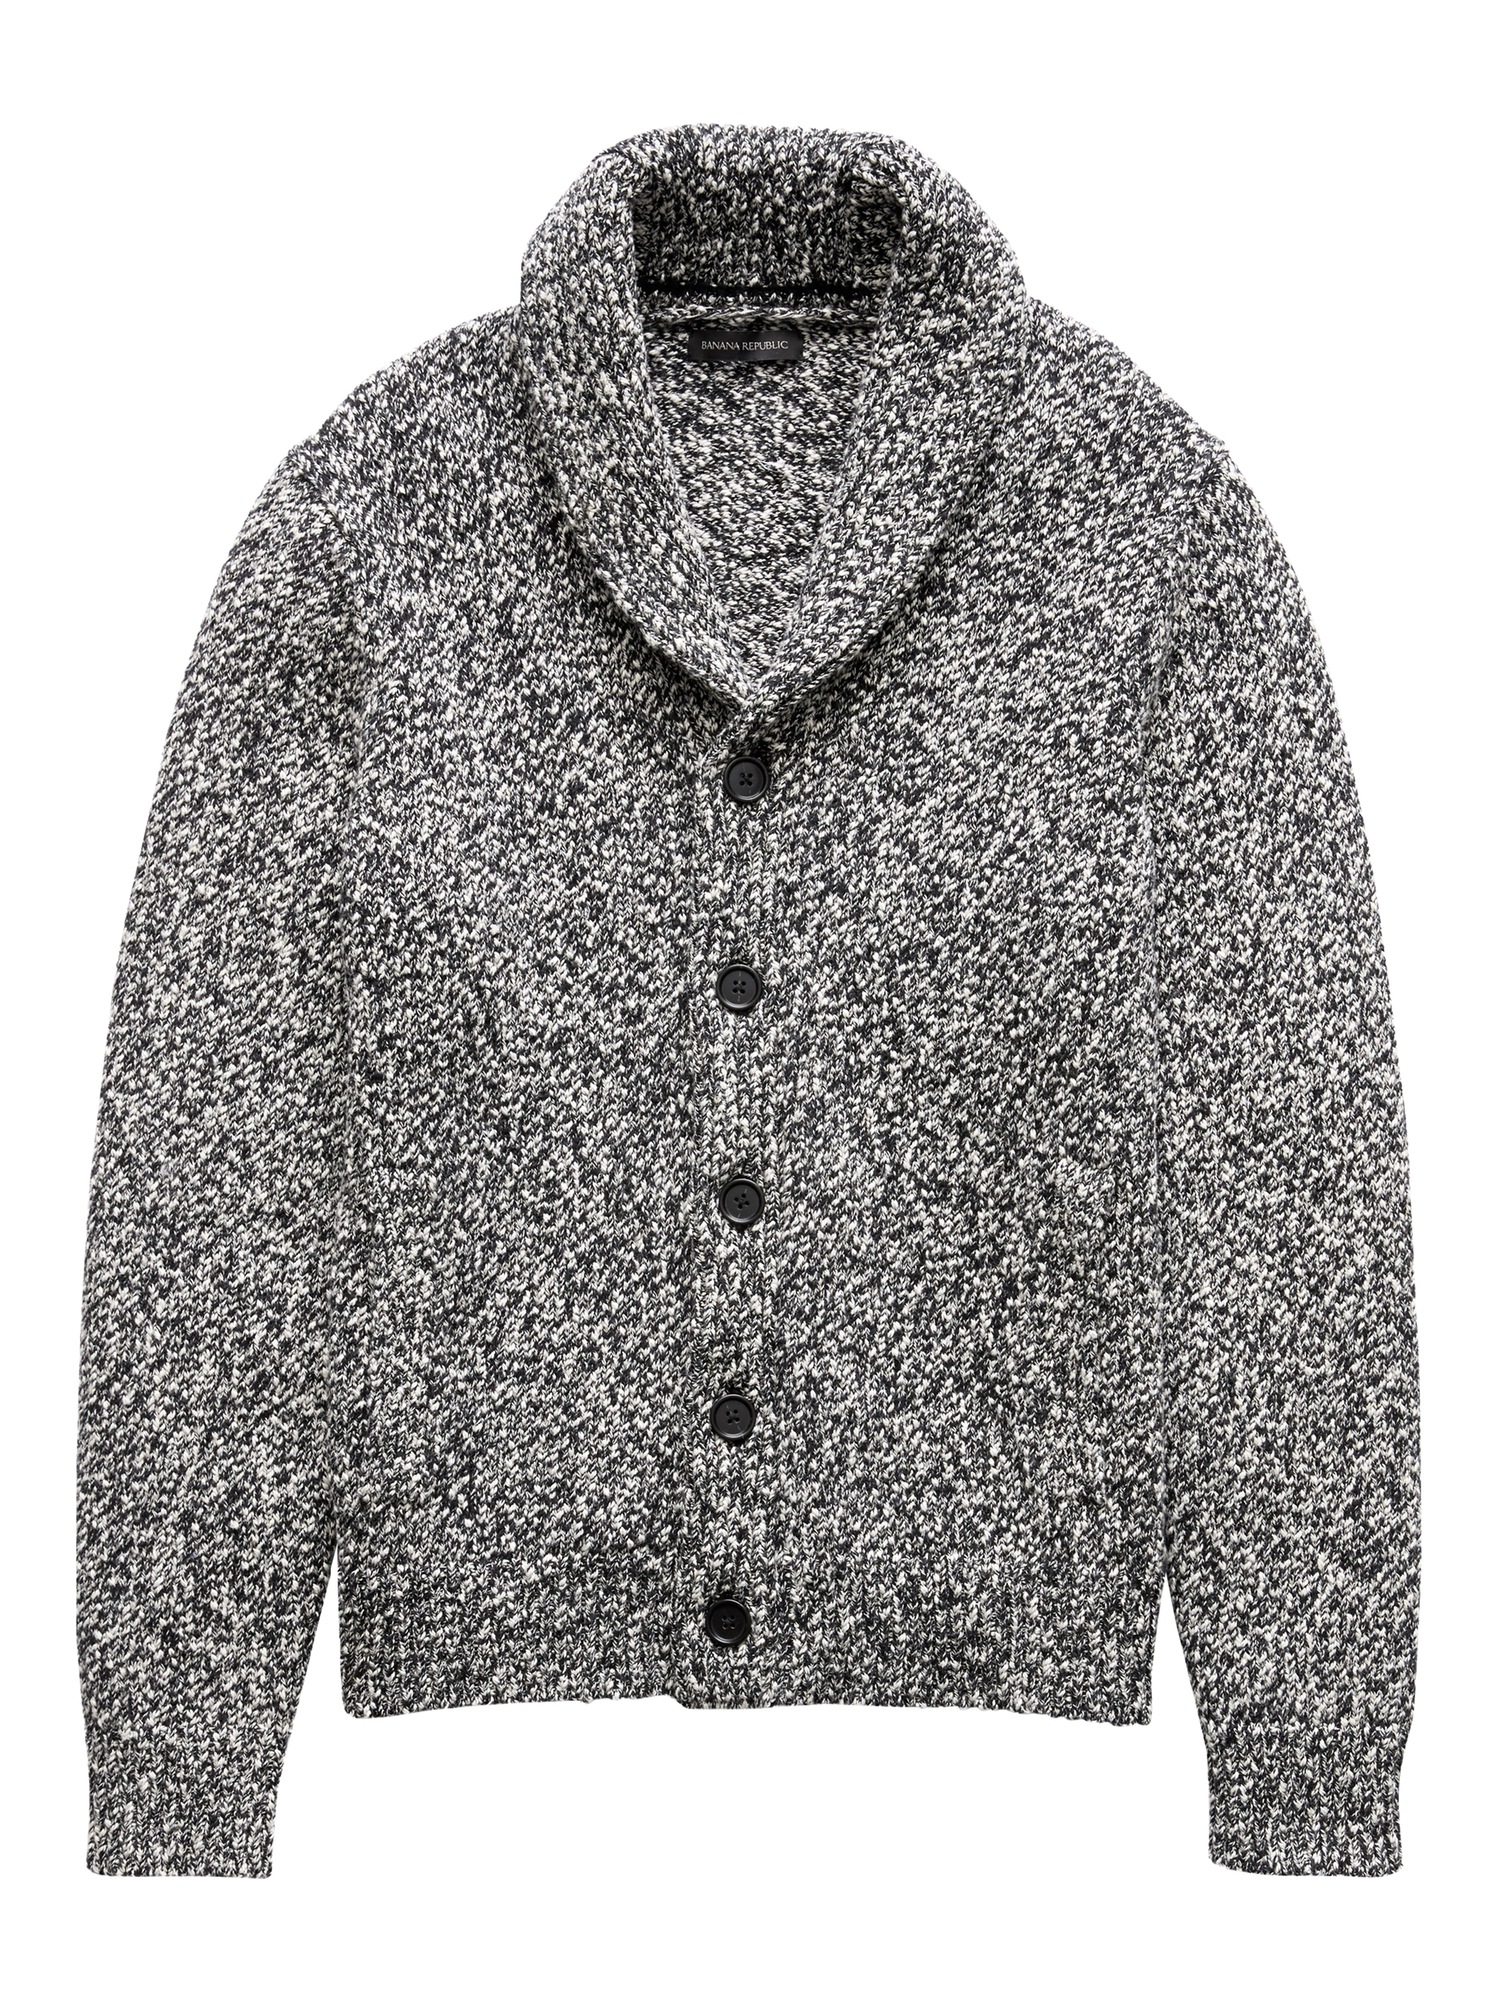 Marled Cotton Shawl-Collar Cardigan Sweater